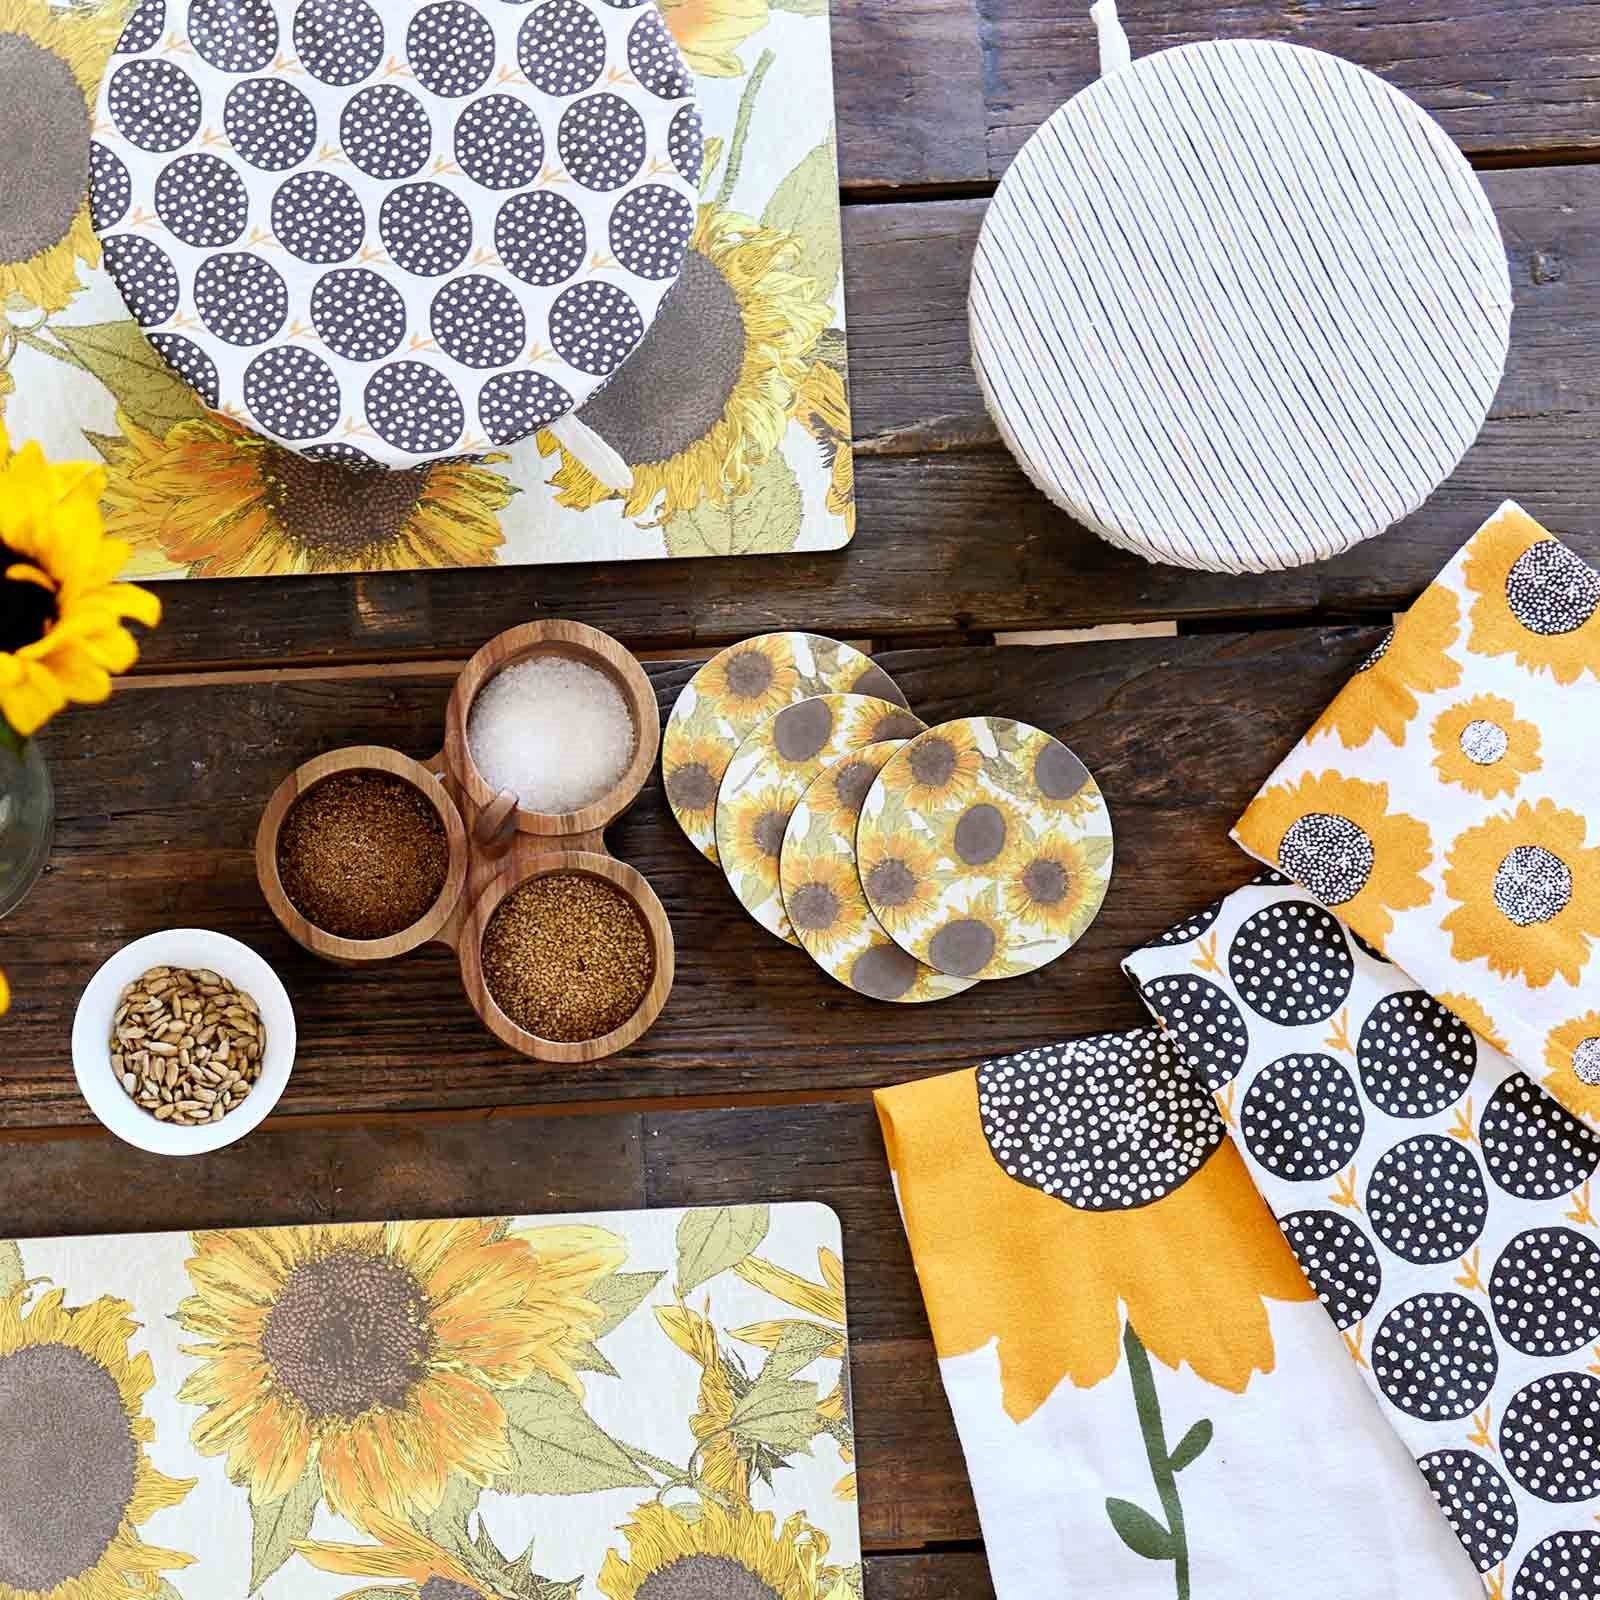 Sunflowers Round Art Coasters - Set of 4 Coaster - rockflowerpaper